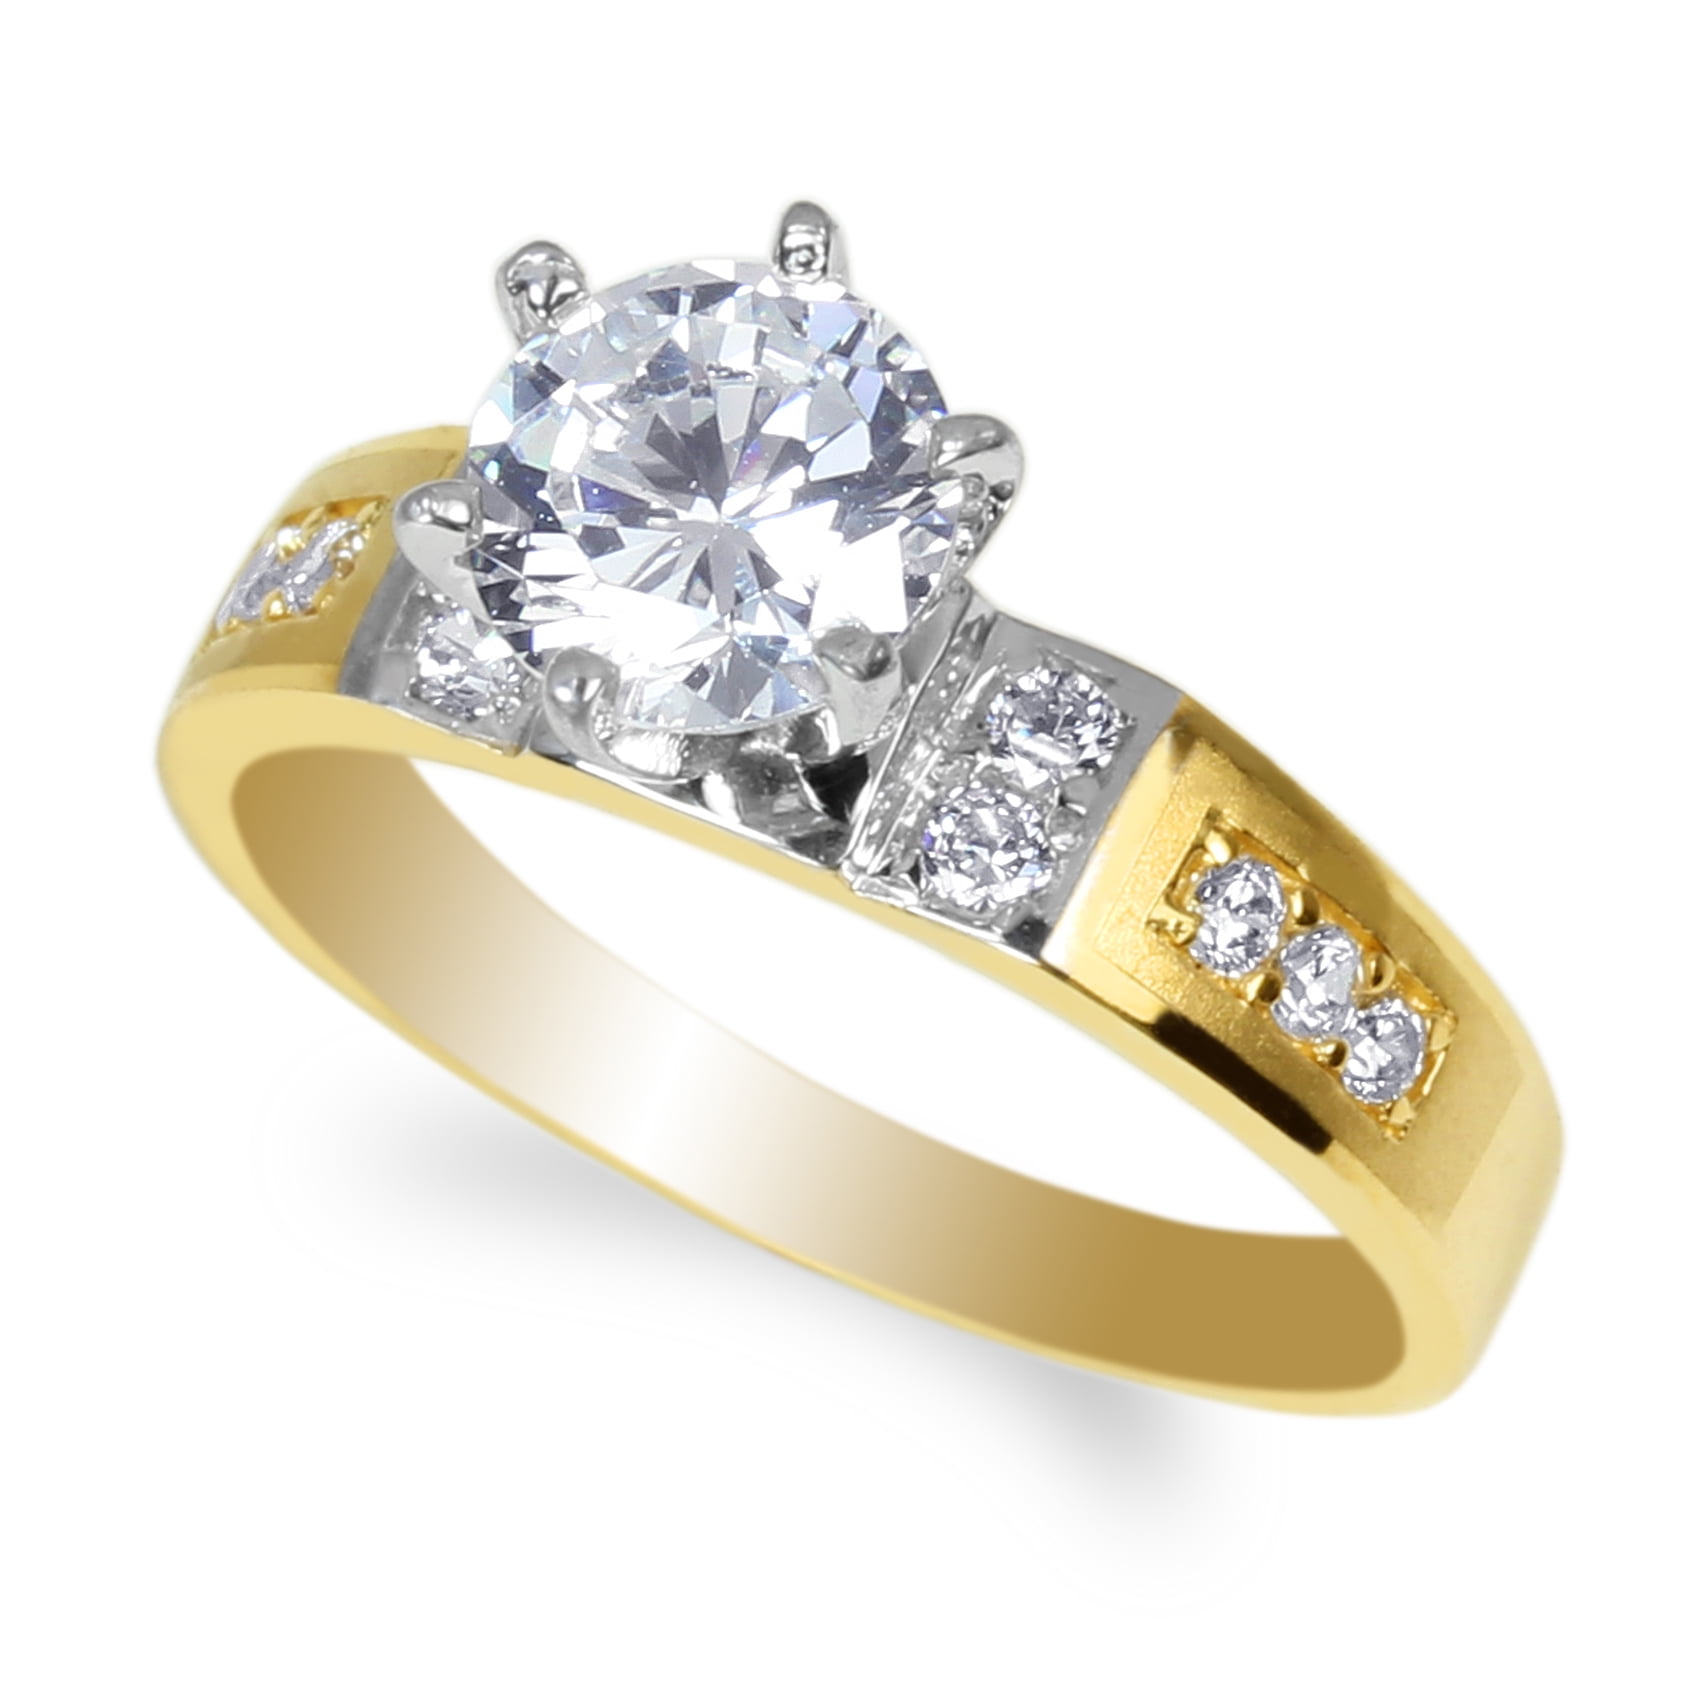 Ladies 10K White Gold 1.1ct Round CZ Wedding Solitaire Ring Size 7-12 